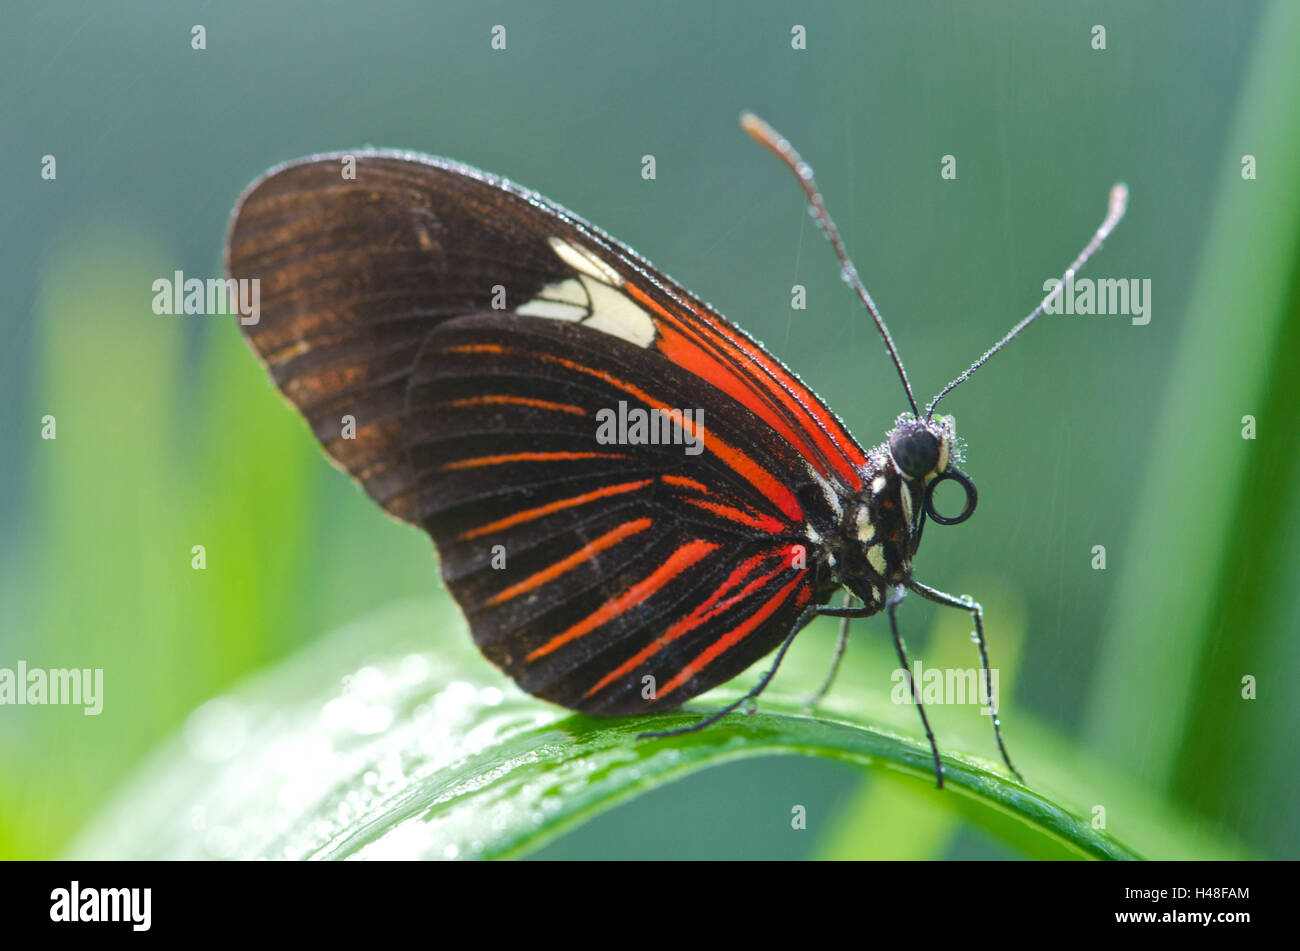 Butterfly, red, black, folded wings, rain, Stock Photo